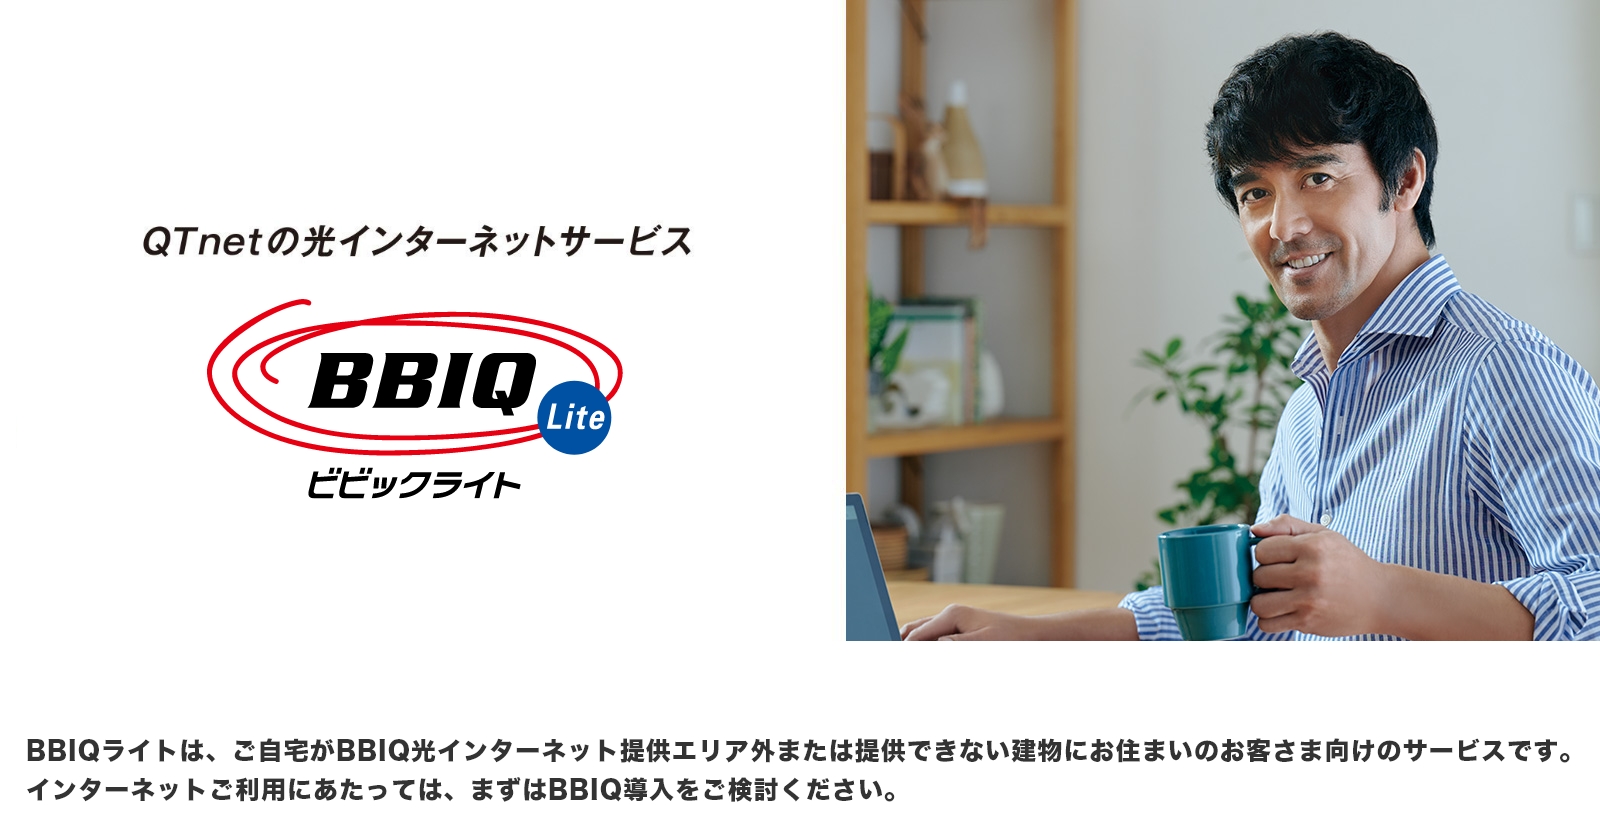 BBIQ・BBIQライトは、九州電力グループのQTnetがお届けする光インターネットサービスです。